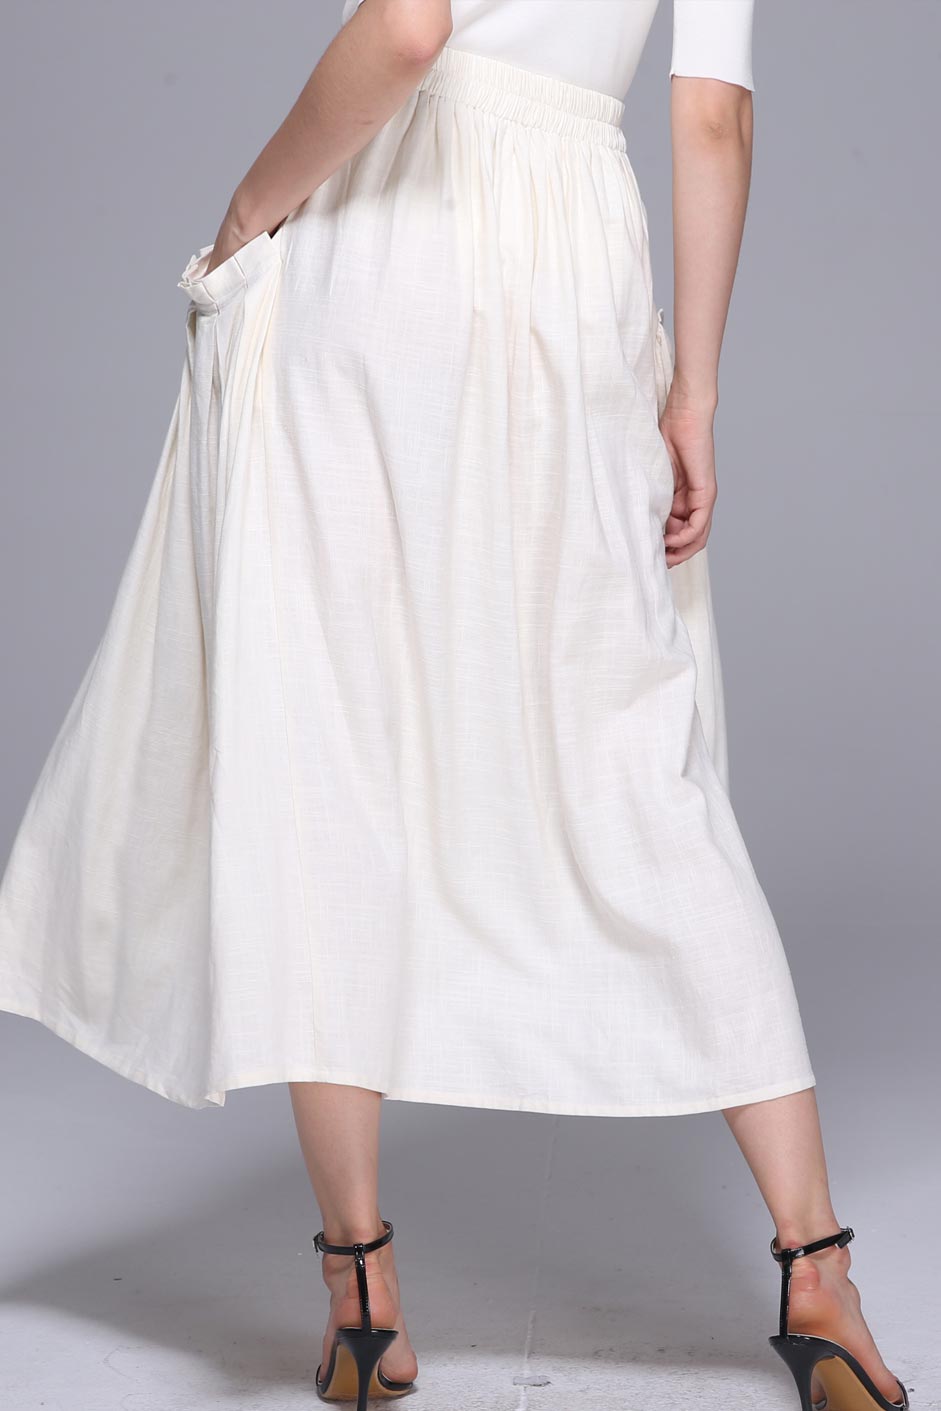 Maxi linen skirt women summer long skirt prom skirt 1391#